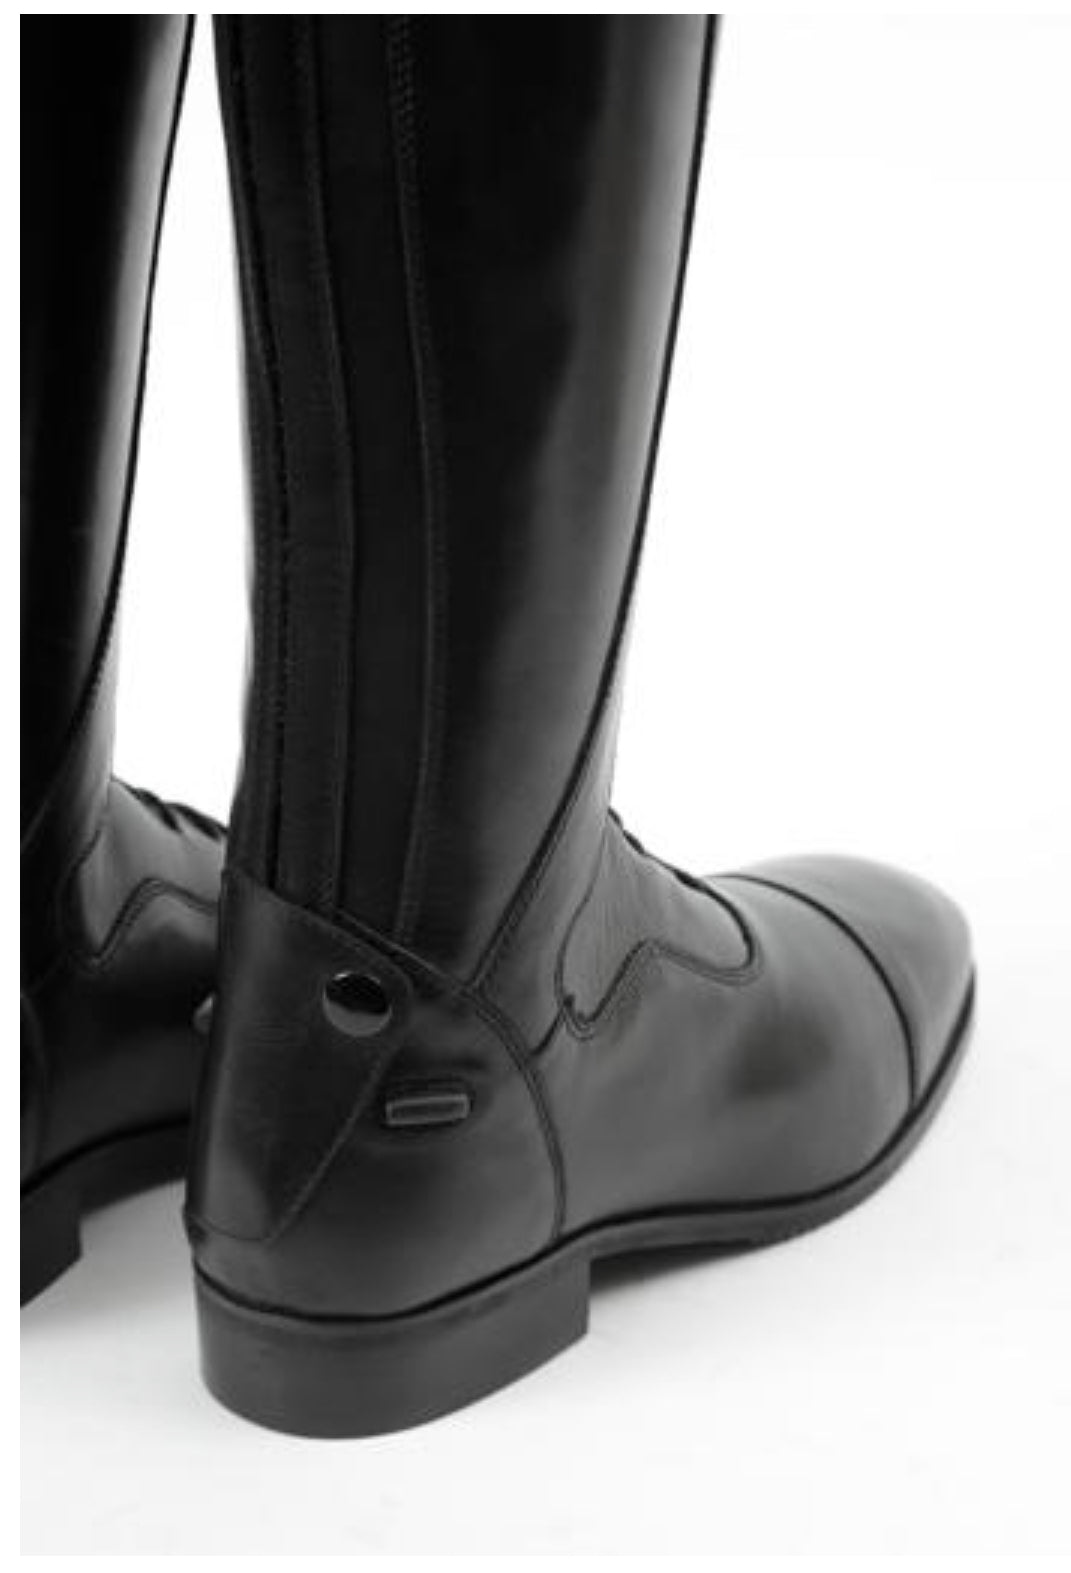 PE Dellucci Ladies Long Leather Field Riding Boots Black